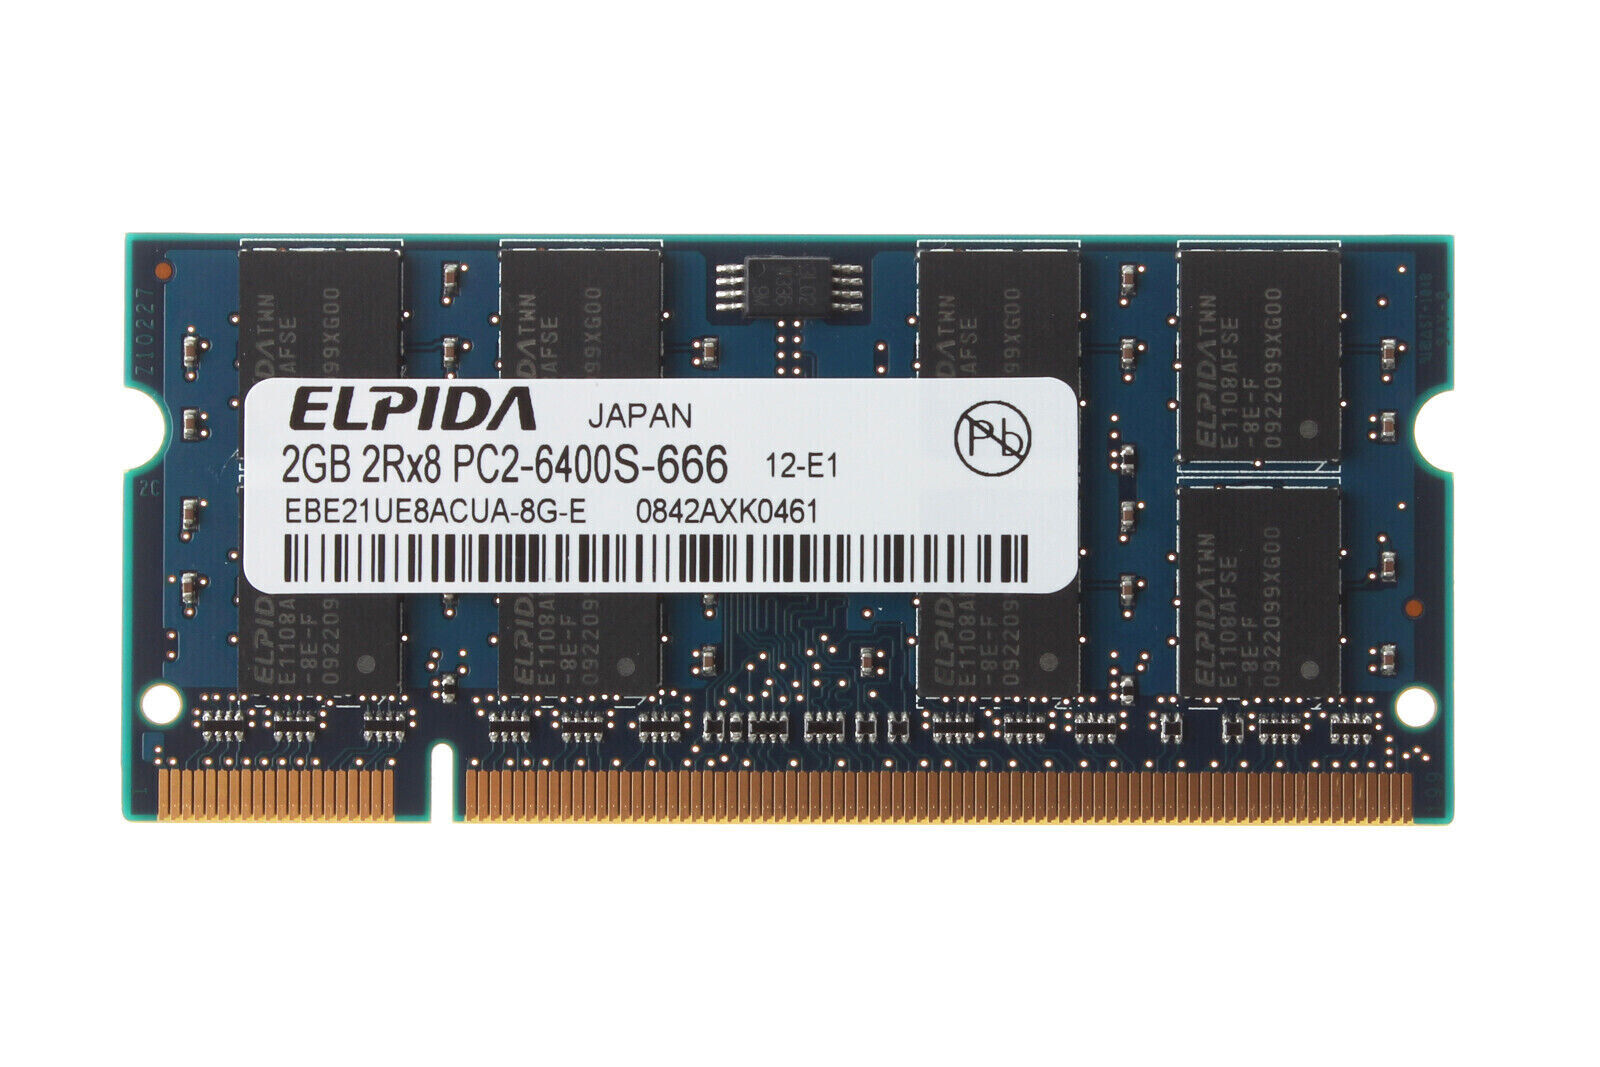 ELPIDA 2GB 2RX8 PC2-6400S-666 Laptop Ram Memory